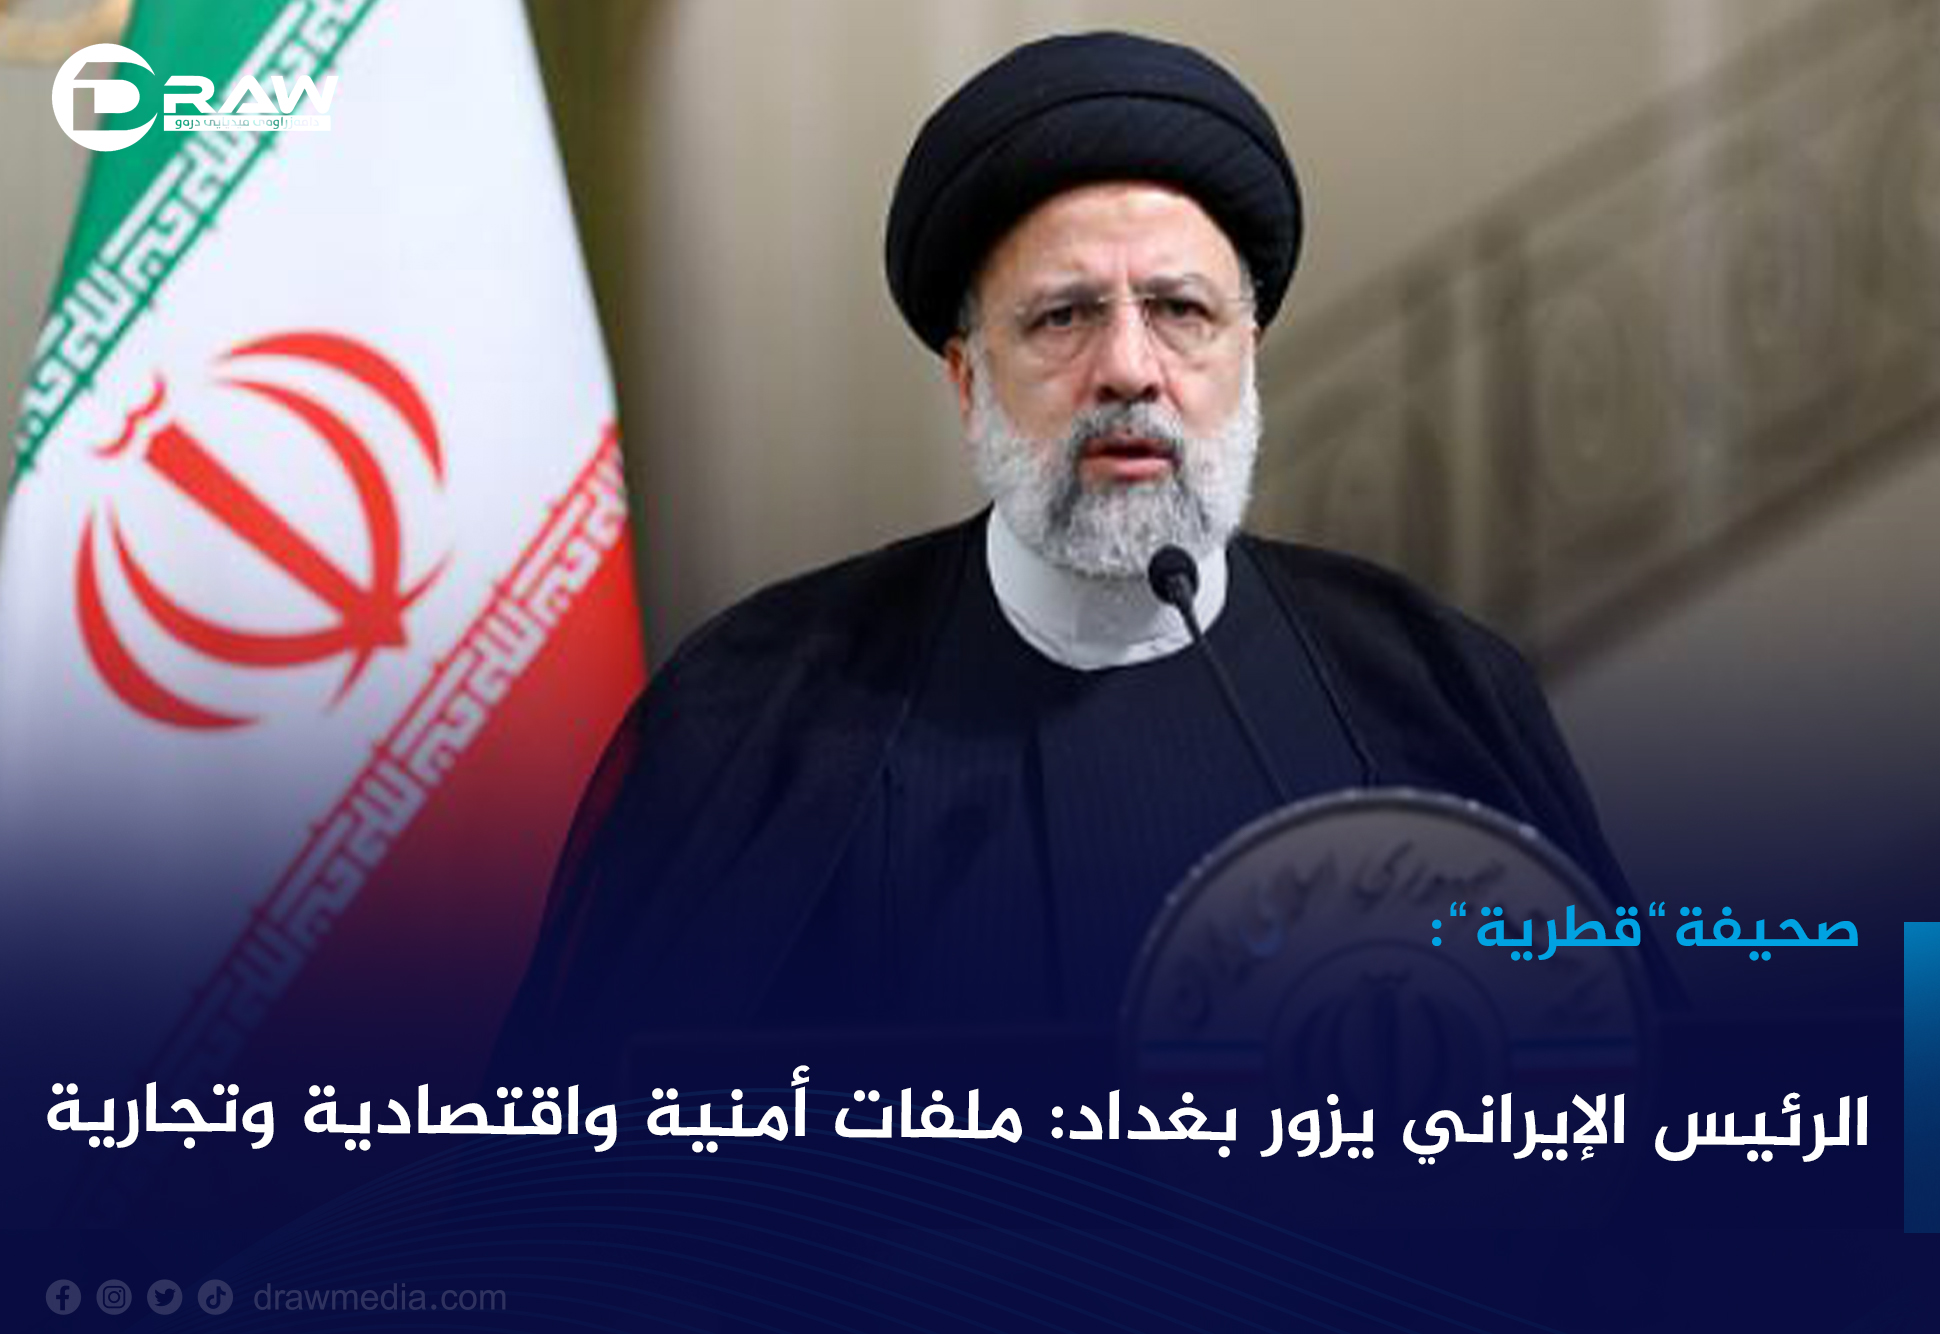 DrawMedia.net / الرئيس الإيراني يزور بغداد: ملفات أمنية واقتصادية وتجارية